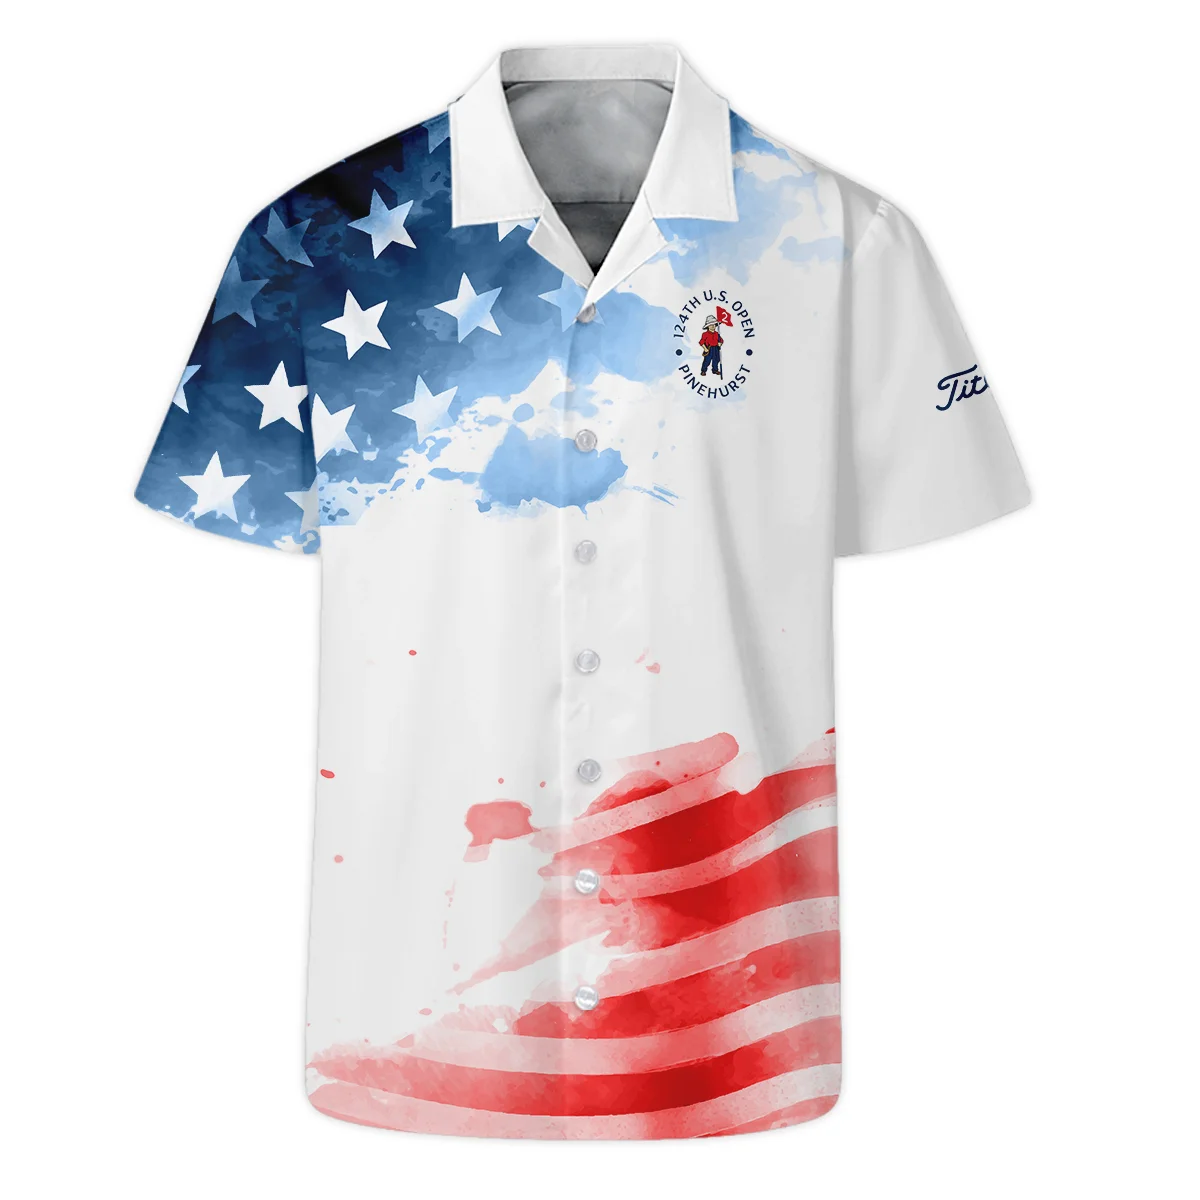 Golf 124th U.S. Open Pinehurst Titleist Bomber Jacket US Flag Watercolor Golf Sports All Over Print Bomber Jacket